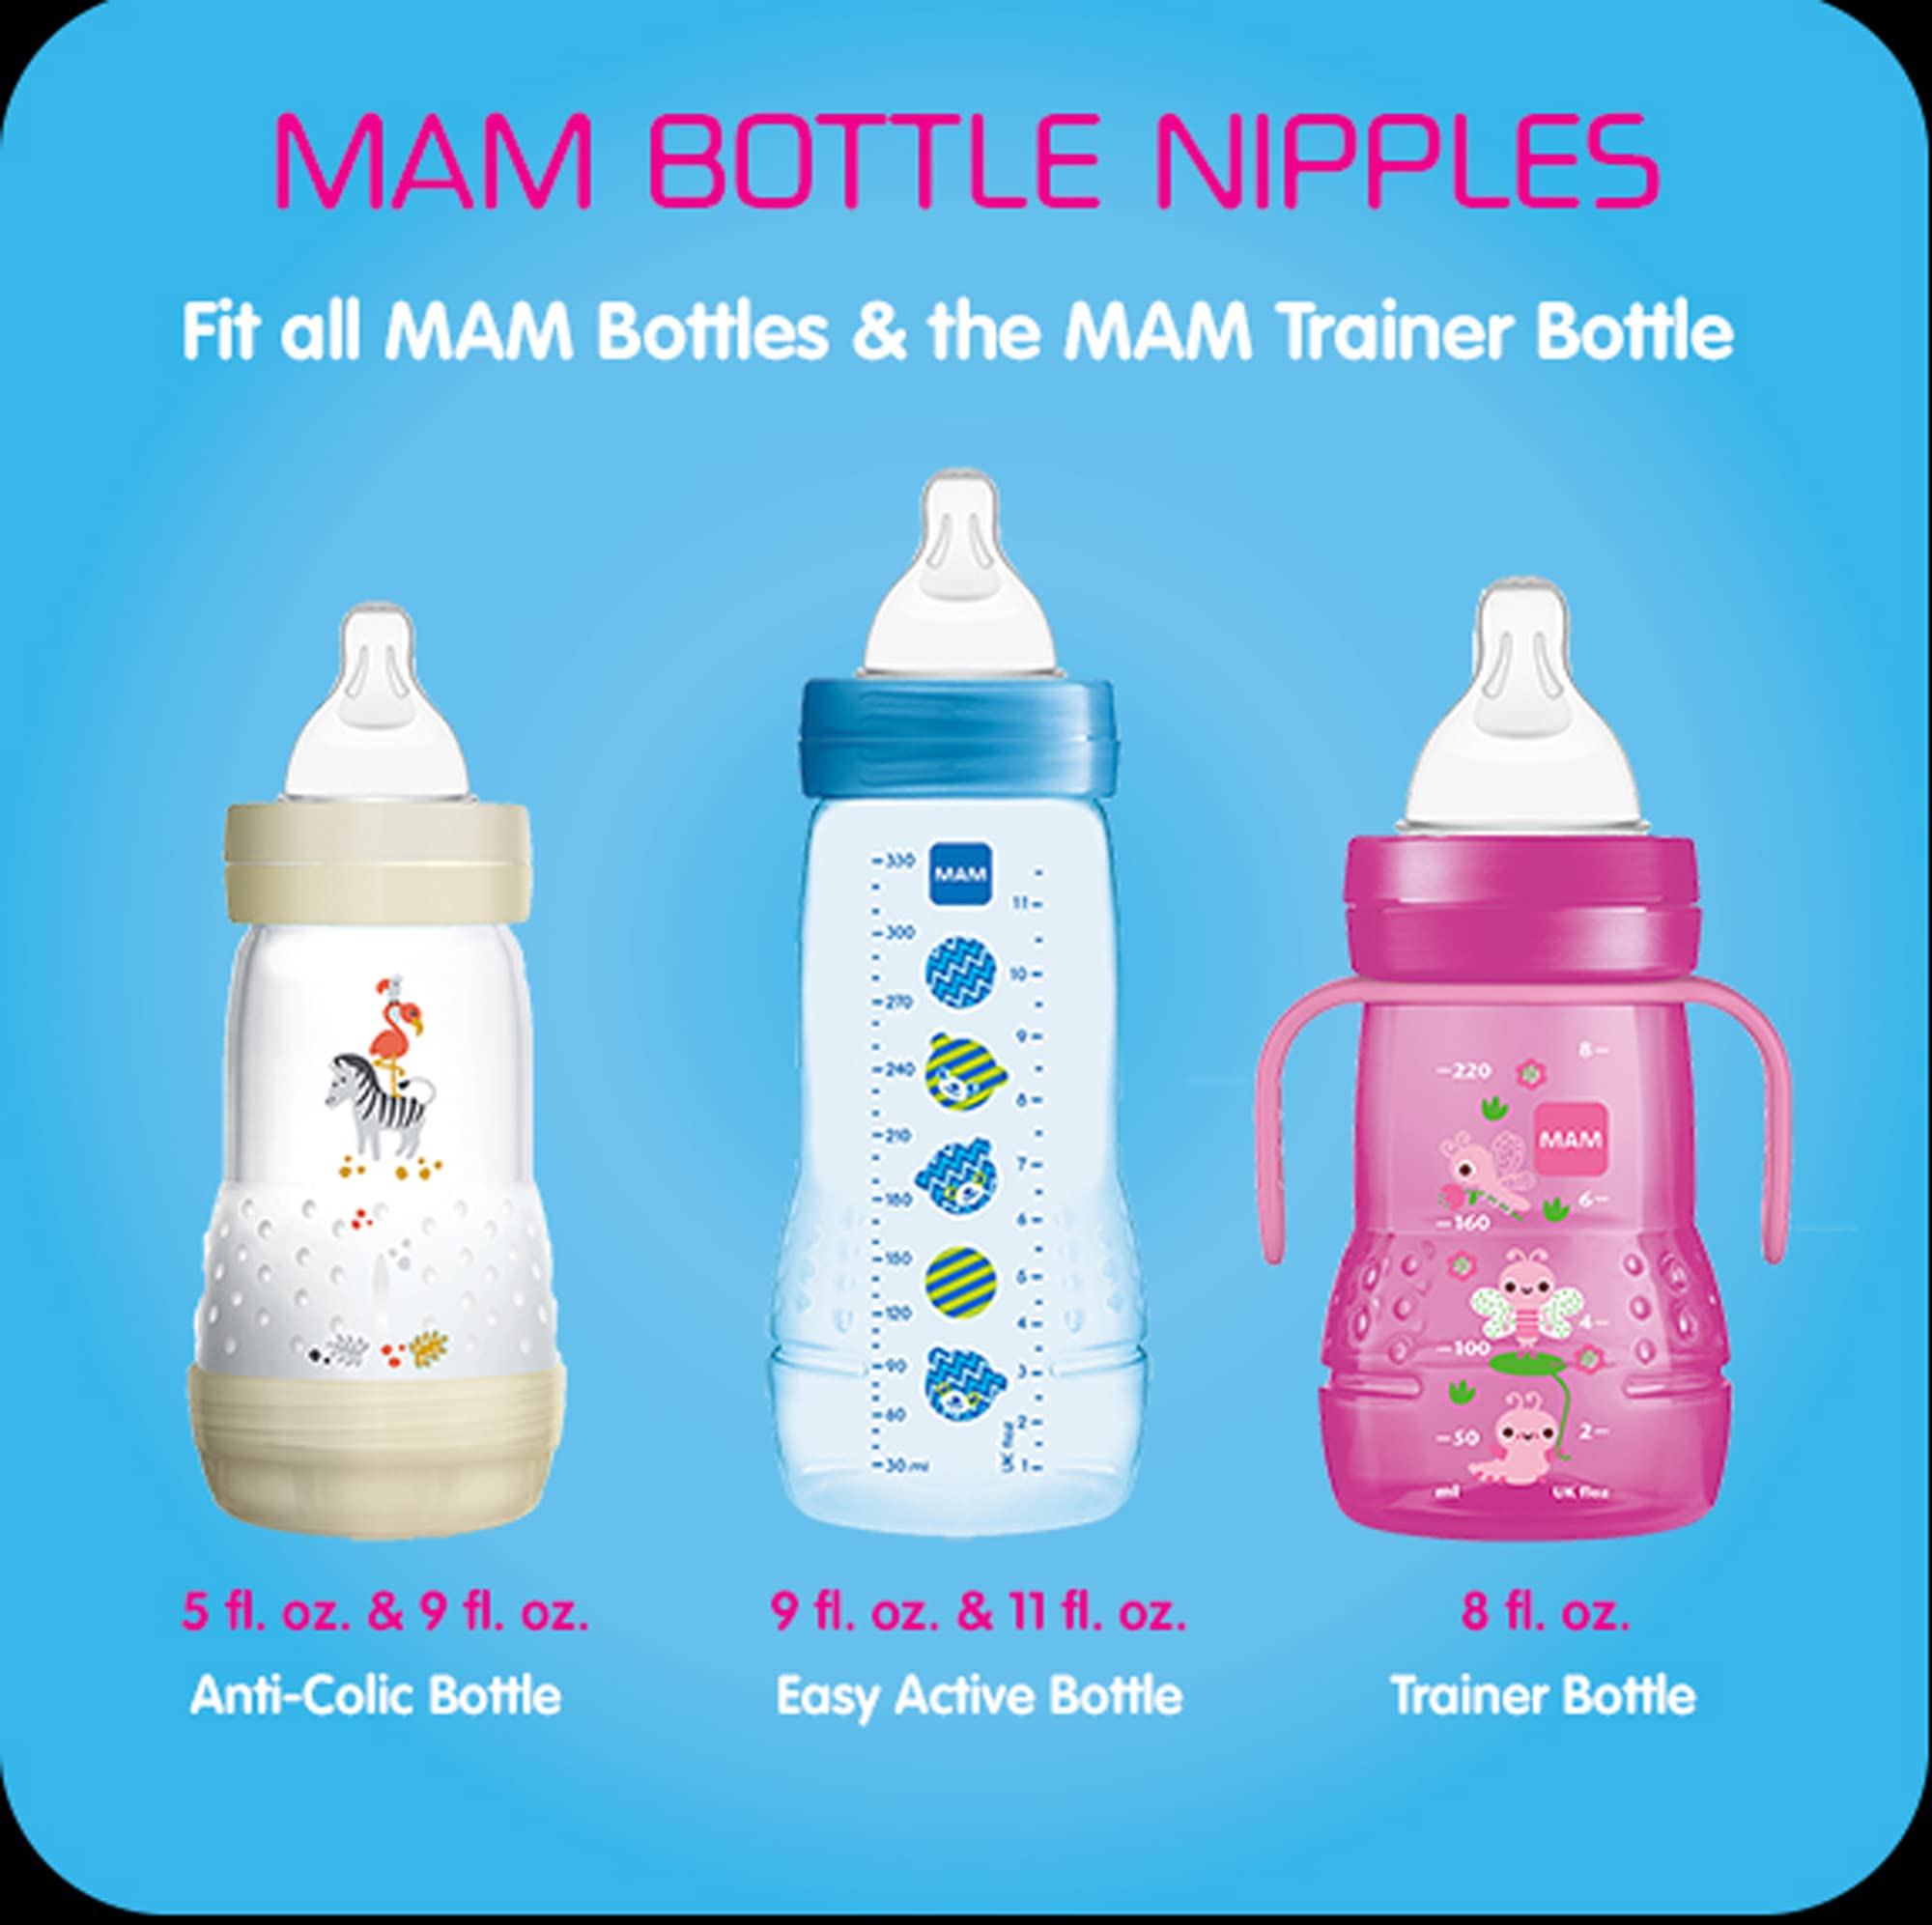 MAM Bottle Nipples Medium Flow Nipple Level 2, for 2+ Months, SkinSoft Silicone Nipples for Baby Bottles, Fits All MAM Bottles, 4 Pack